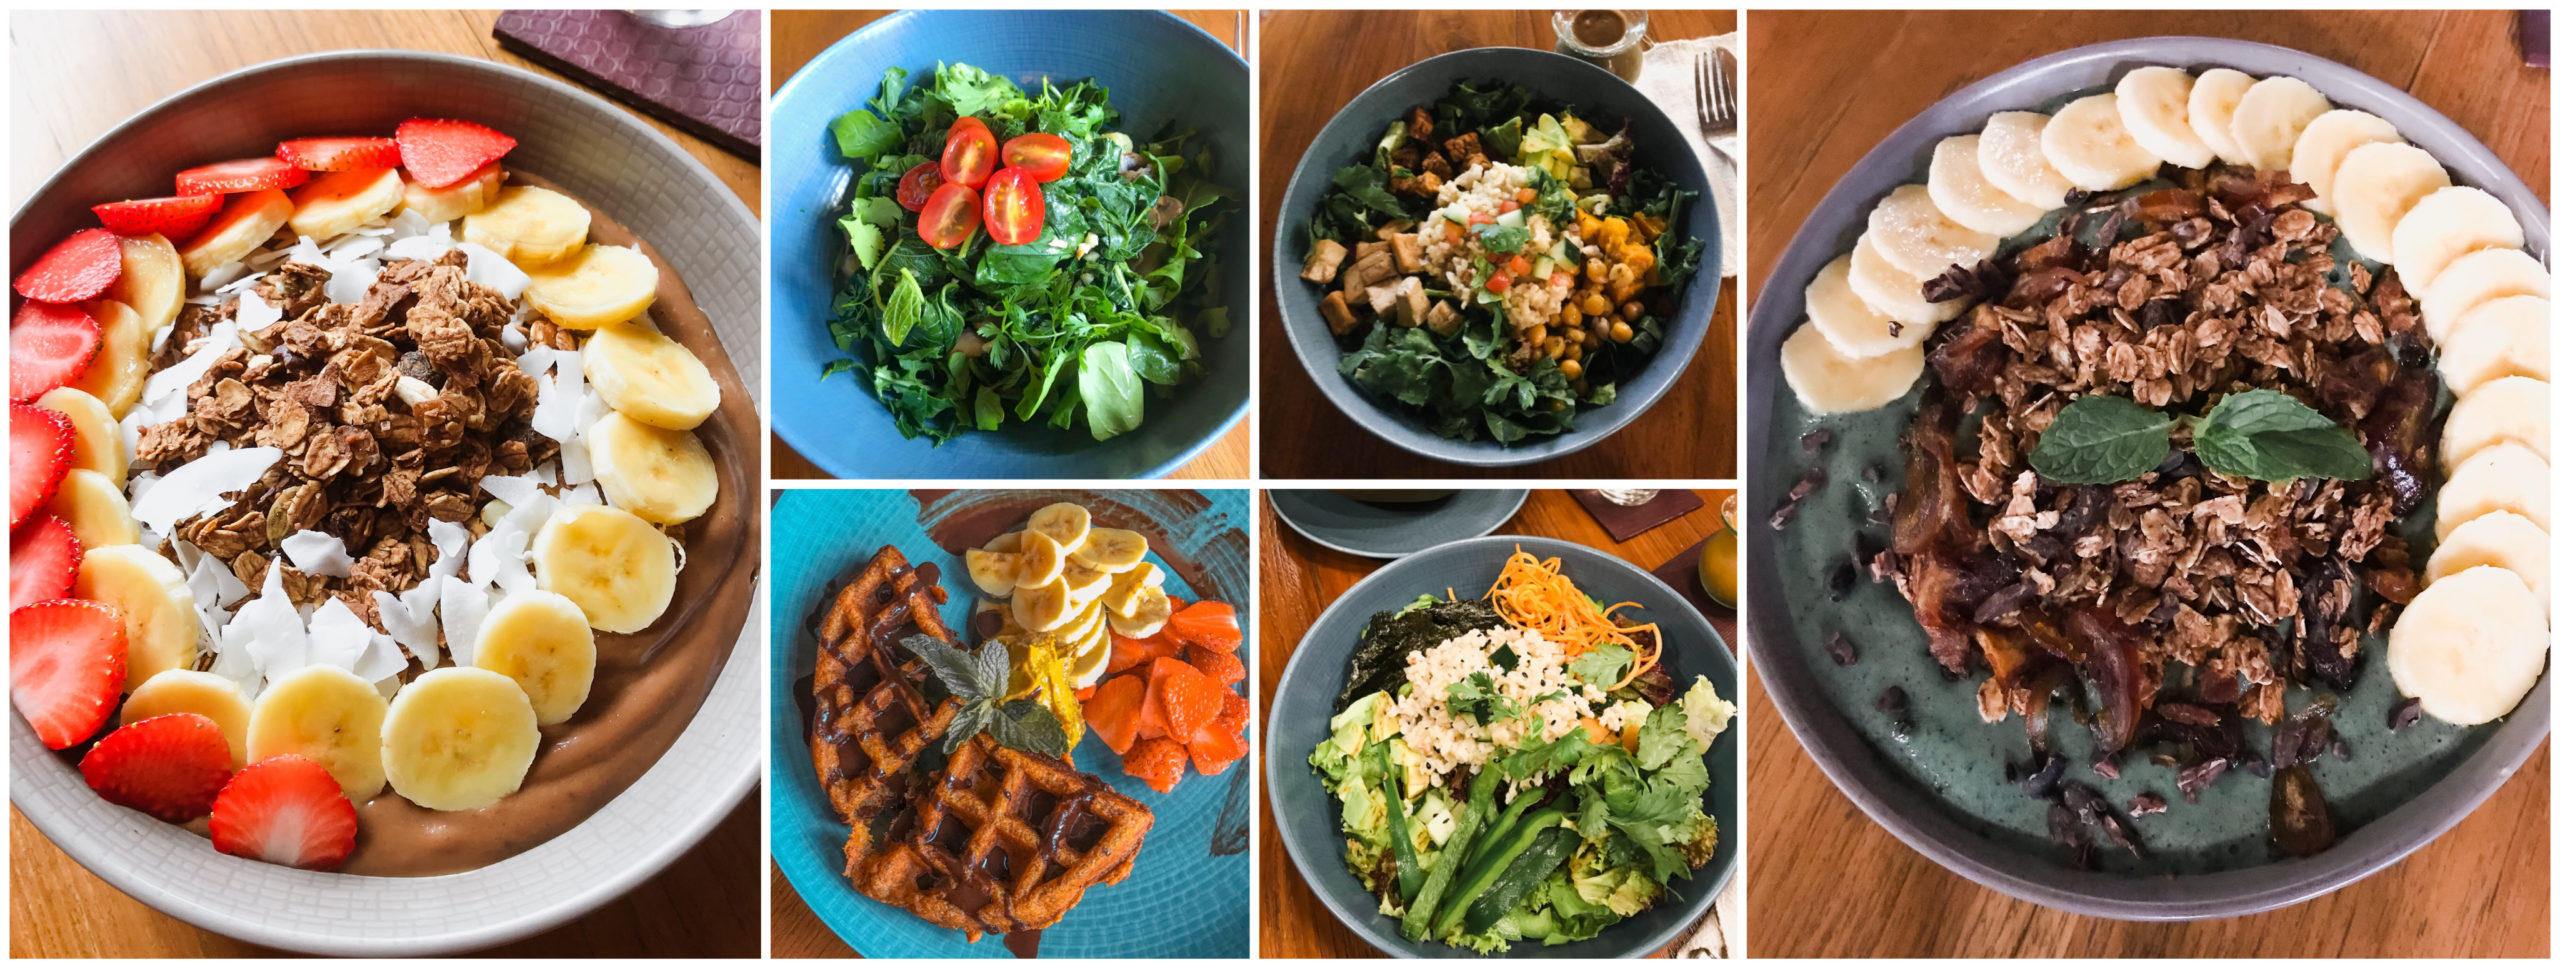 Chandra Cafe Radiantly Alive Vegan Bowl Salad Smoothie Ubud Bali